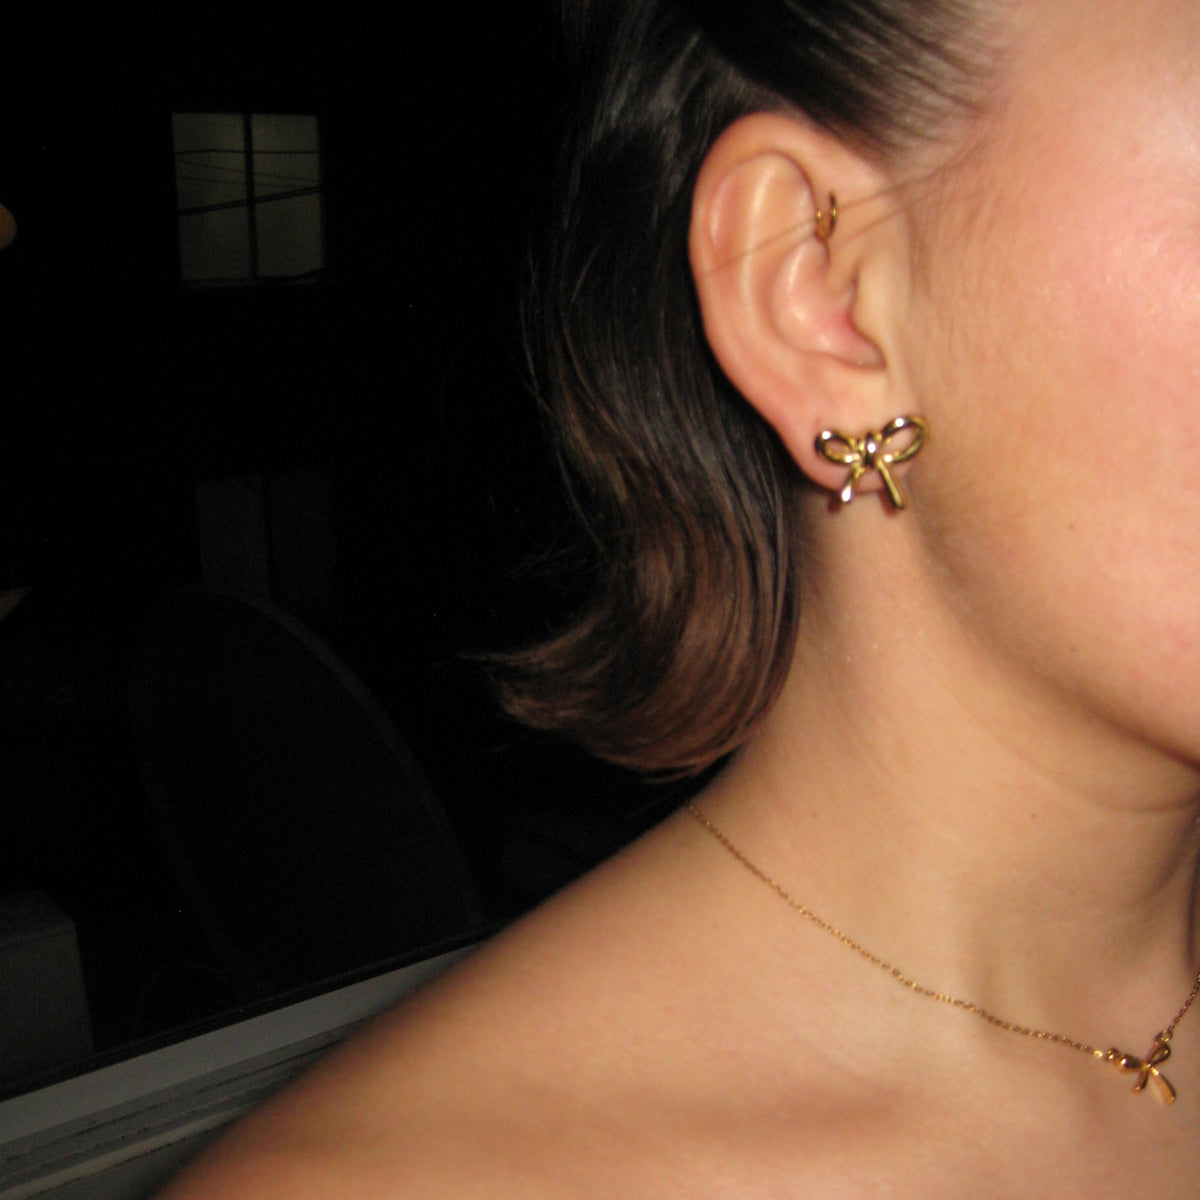 BOWTIFUL earrings - gold